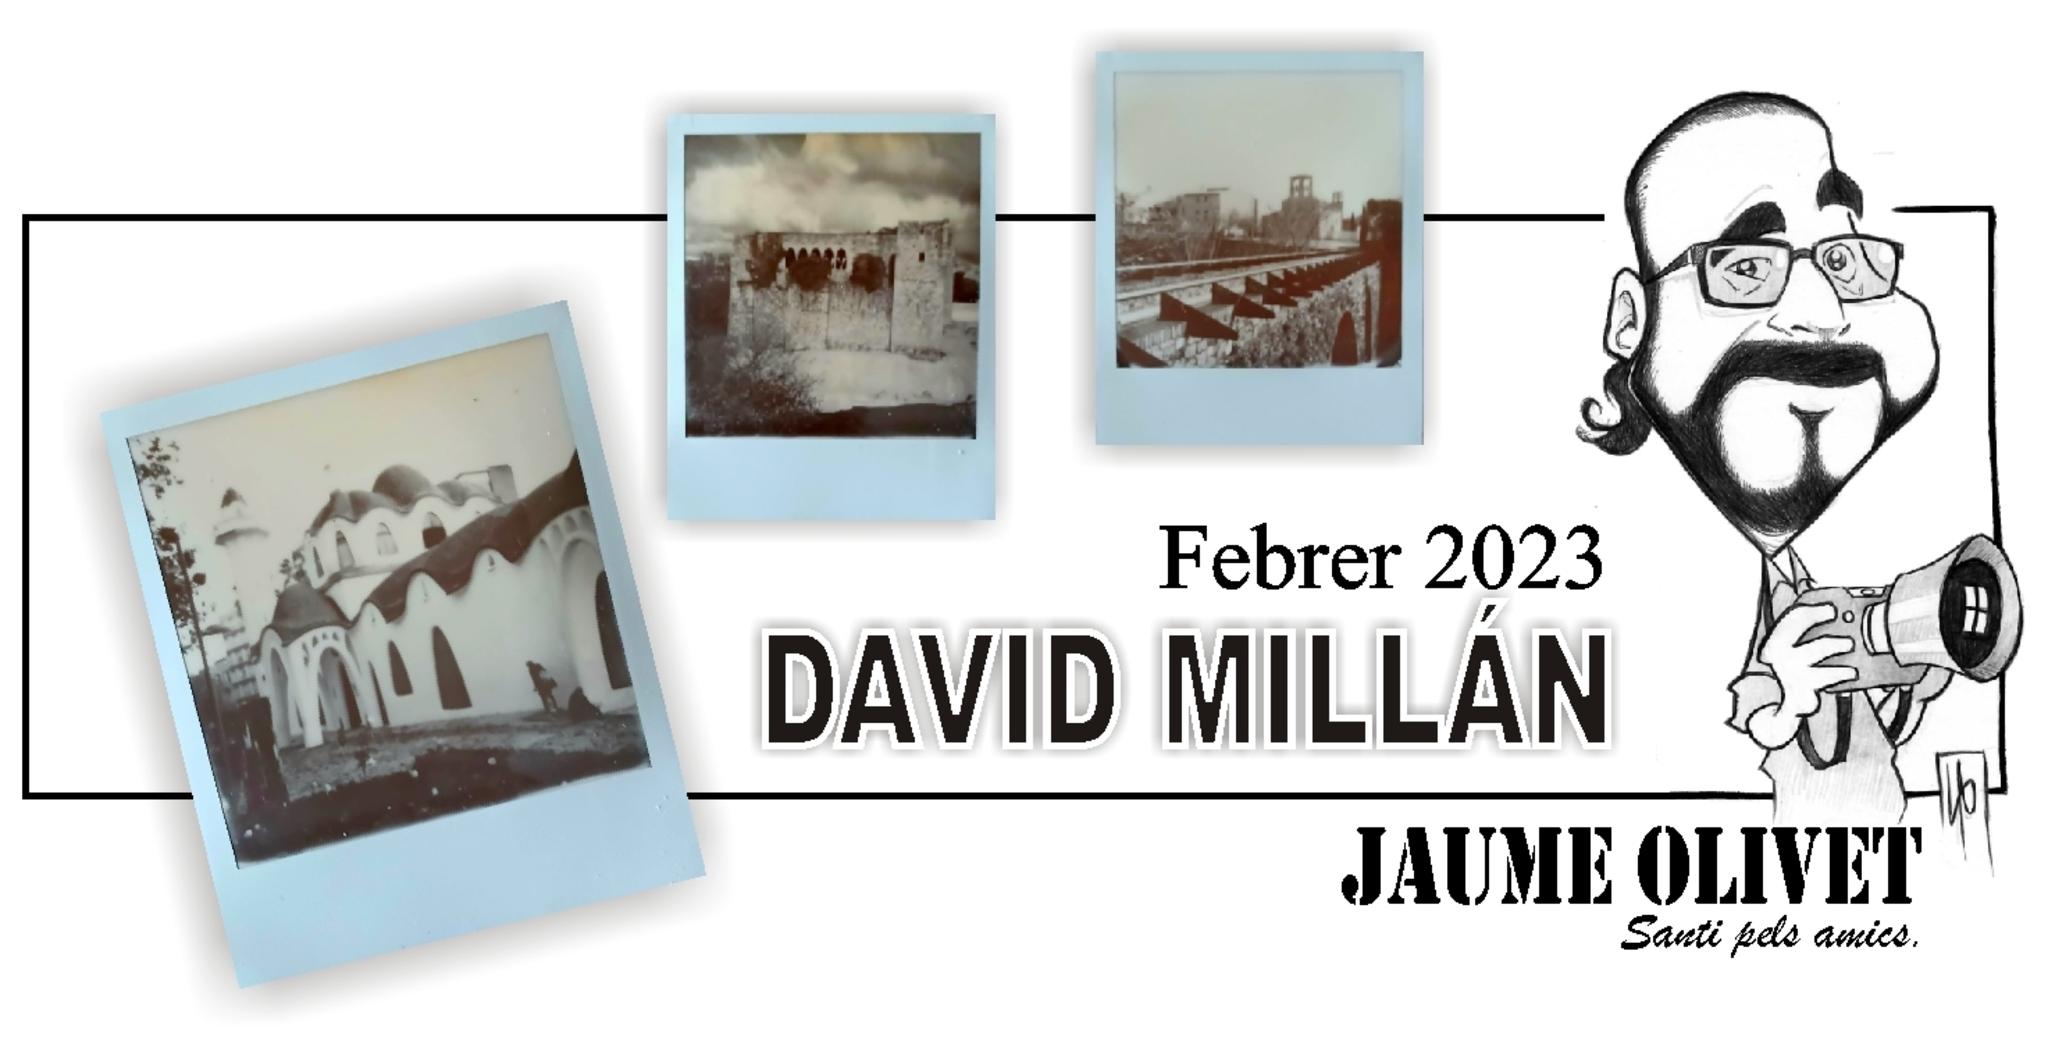  David Milln 2023